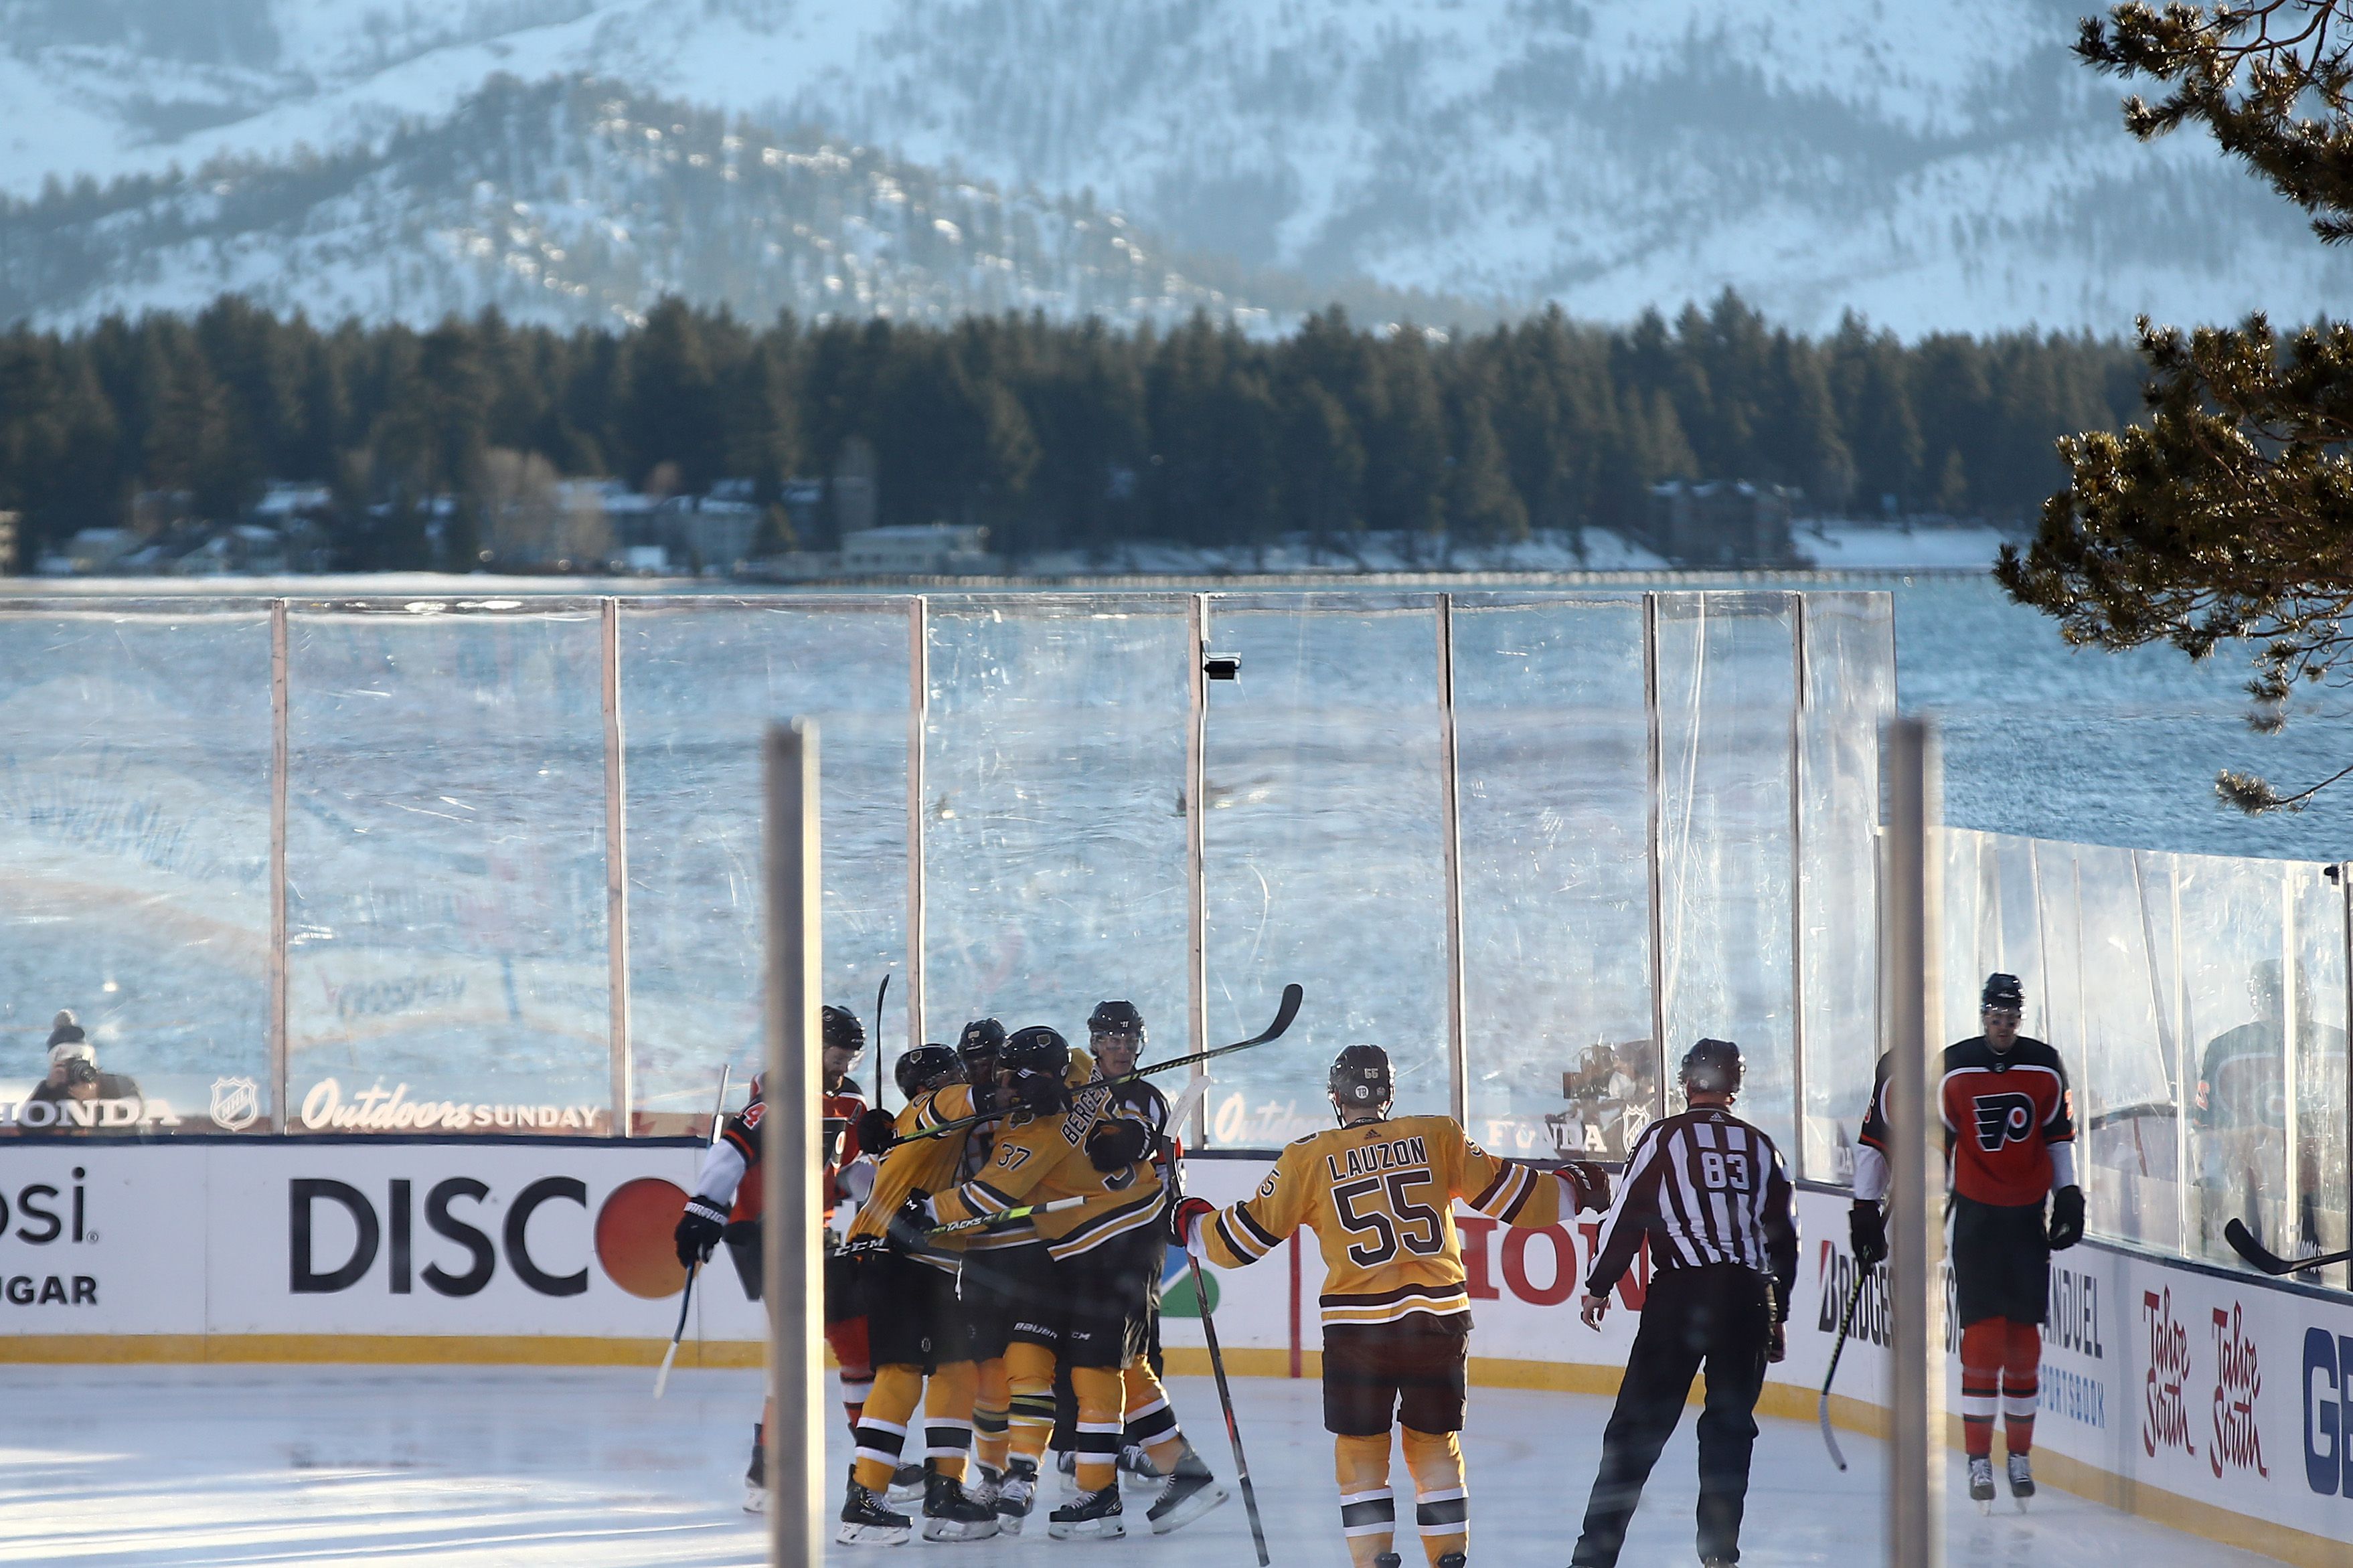 Bruins' personalities and skills on full display at Lake Tahoe